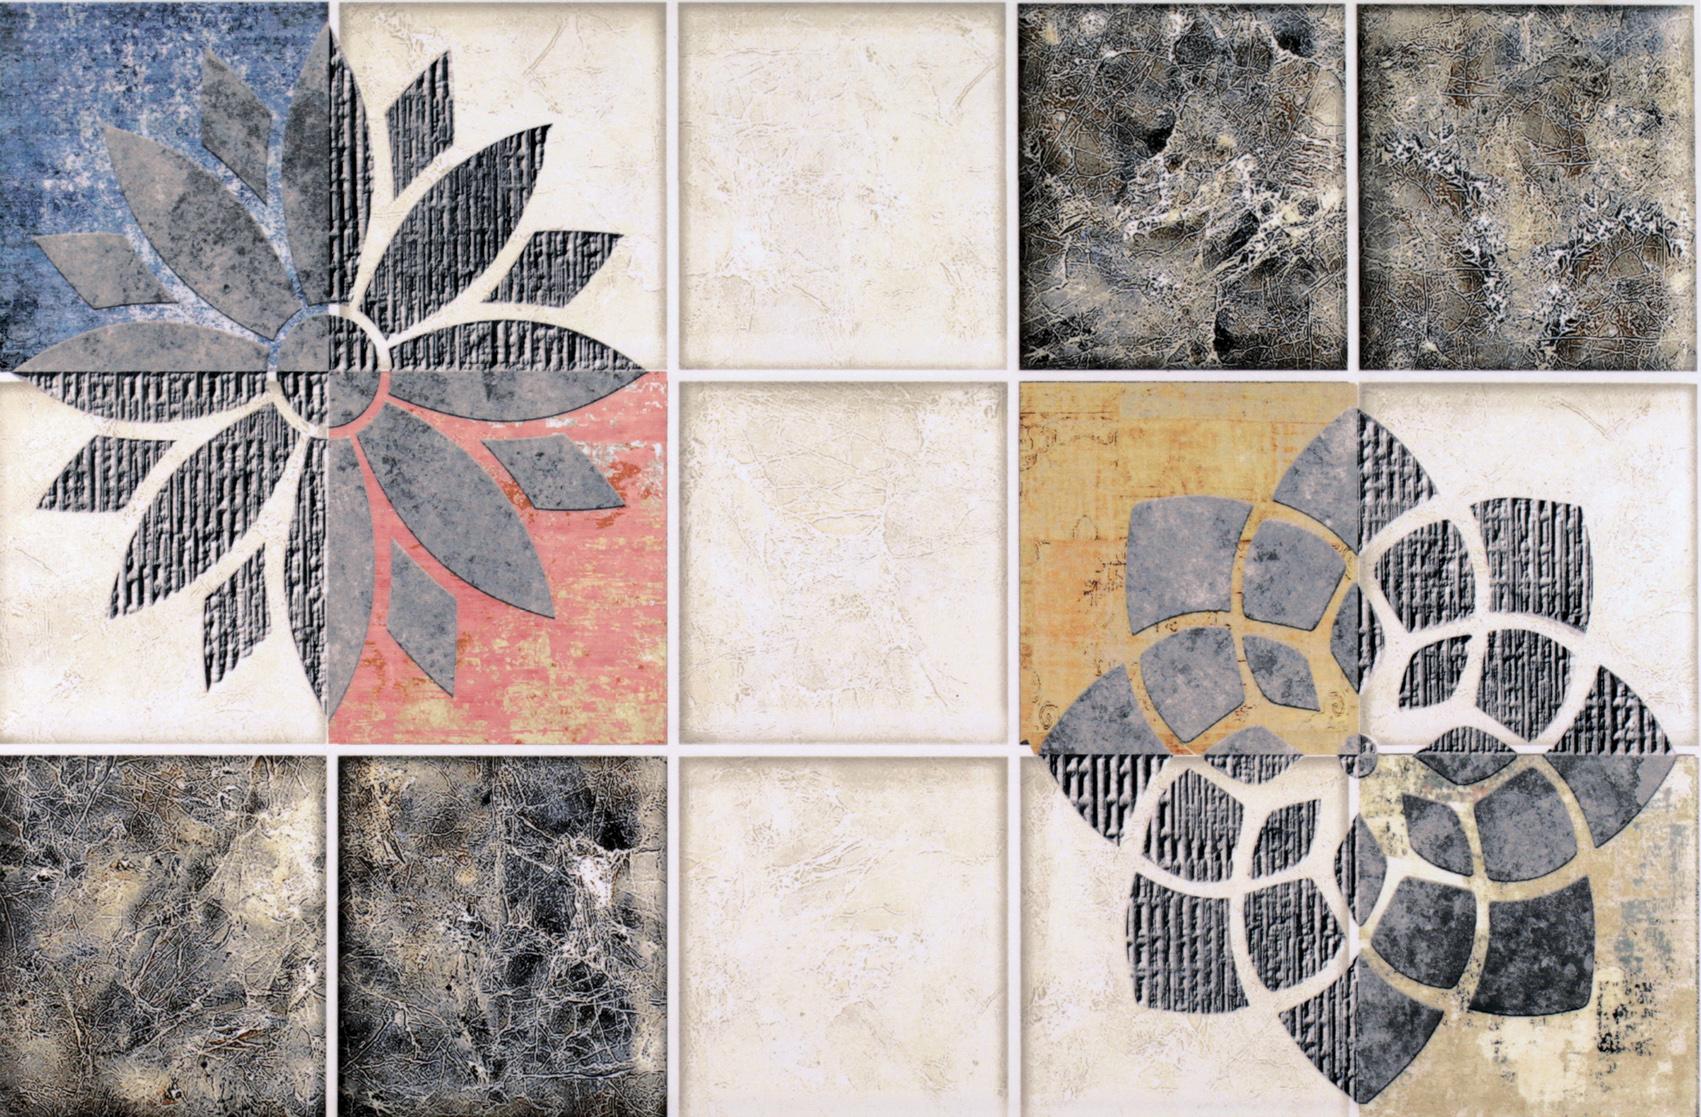 Cream Tiles for Bathroom Tiles, Kitchen Tiles, Accent Tiles